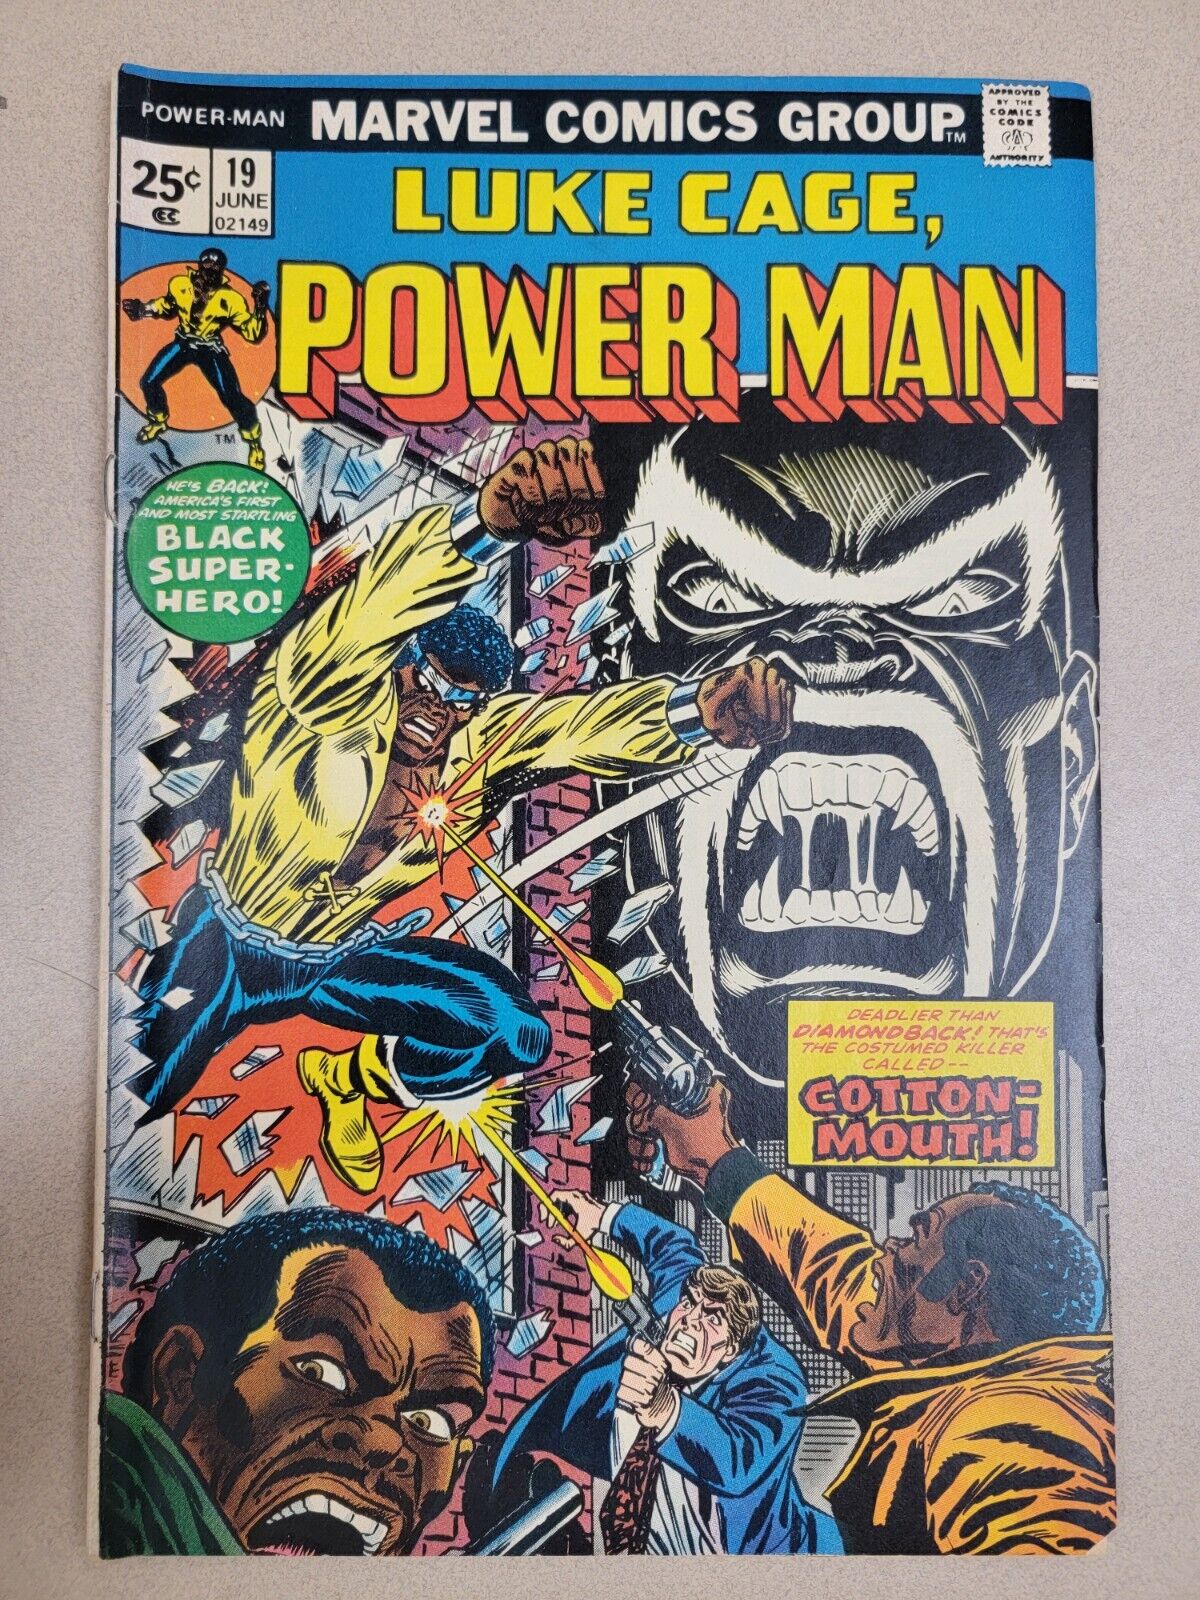 Stan Lee Presents Luke Cage, Power Man Vol 1 #19 June 1974 By Marvel Comics